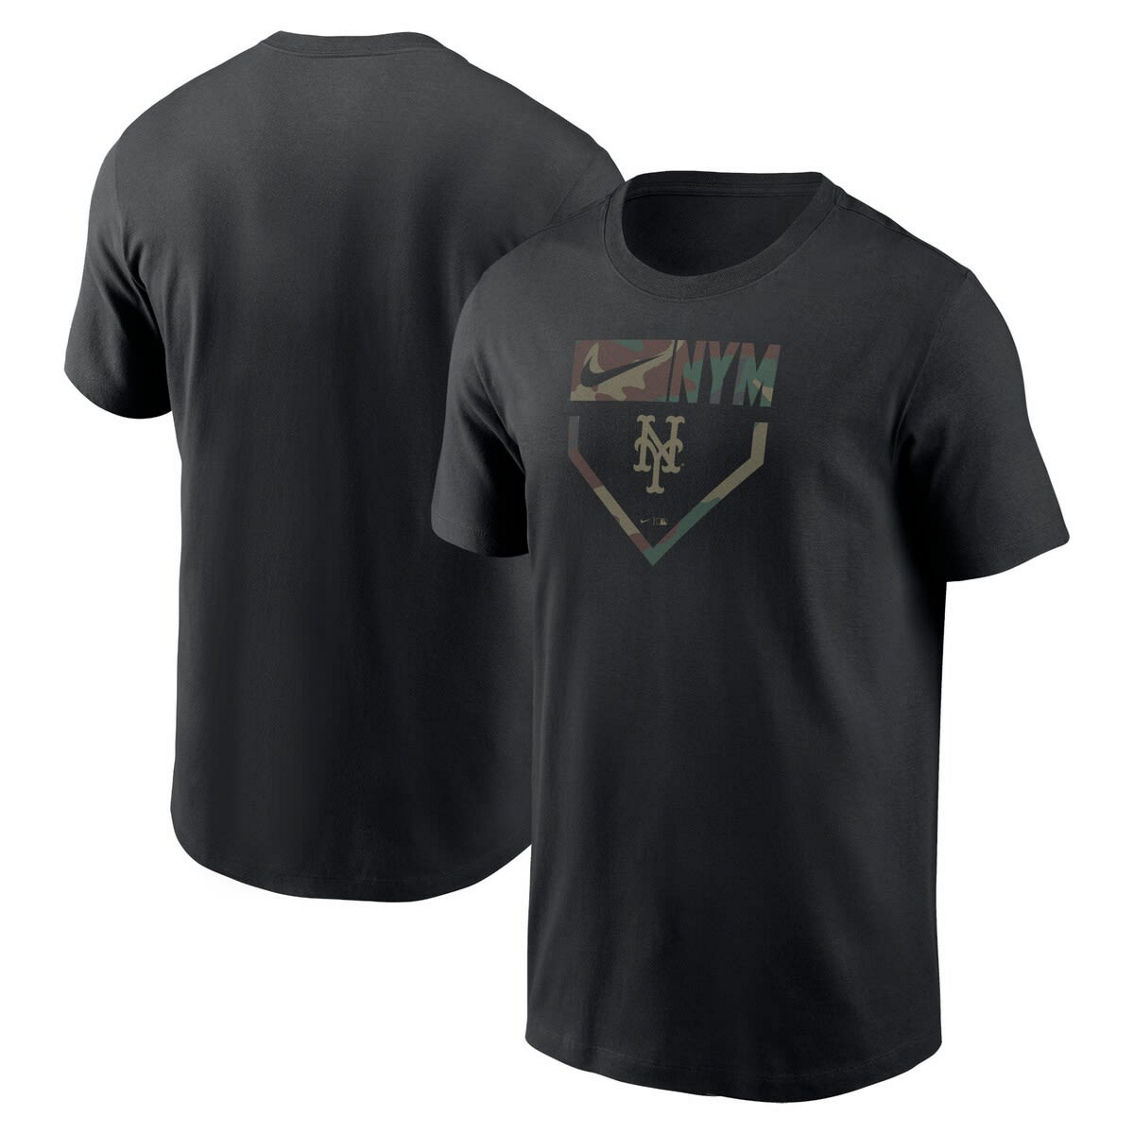 Nike Men's Black New York Mets Camo T-Shirt - Image 2 of 4